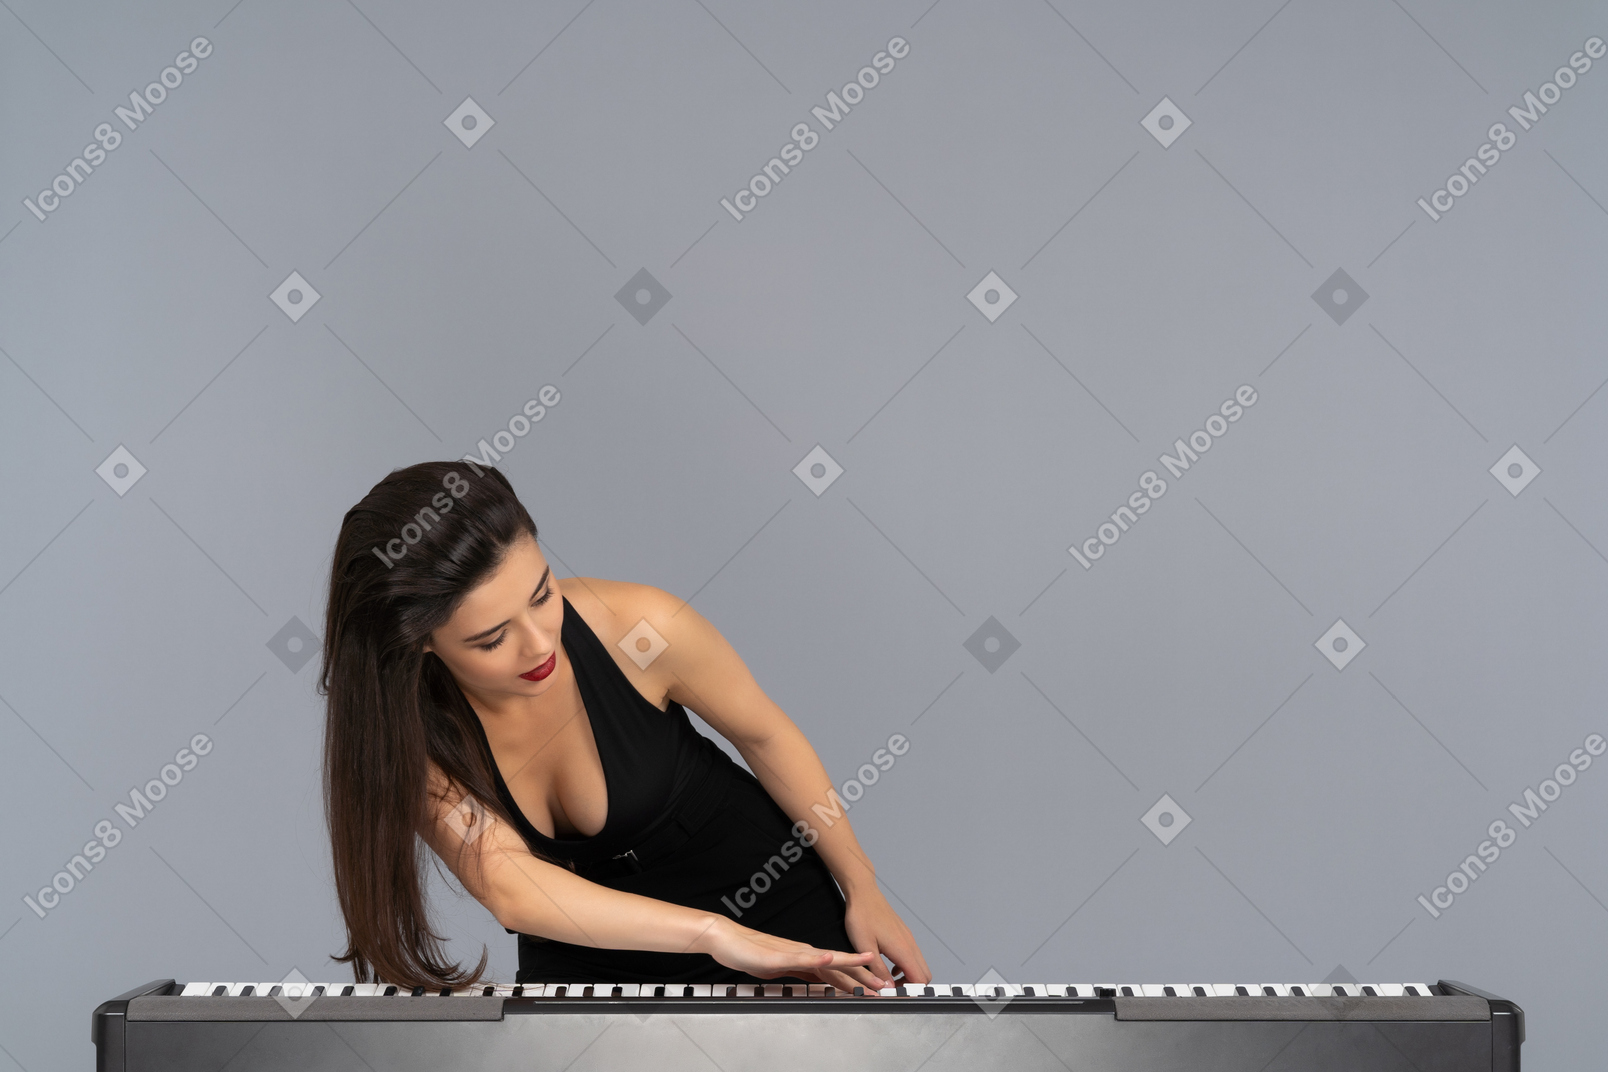 Passionate female pianist swiping piano keys